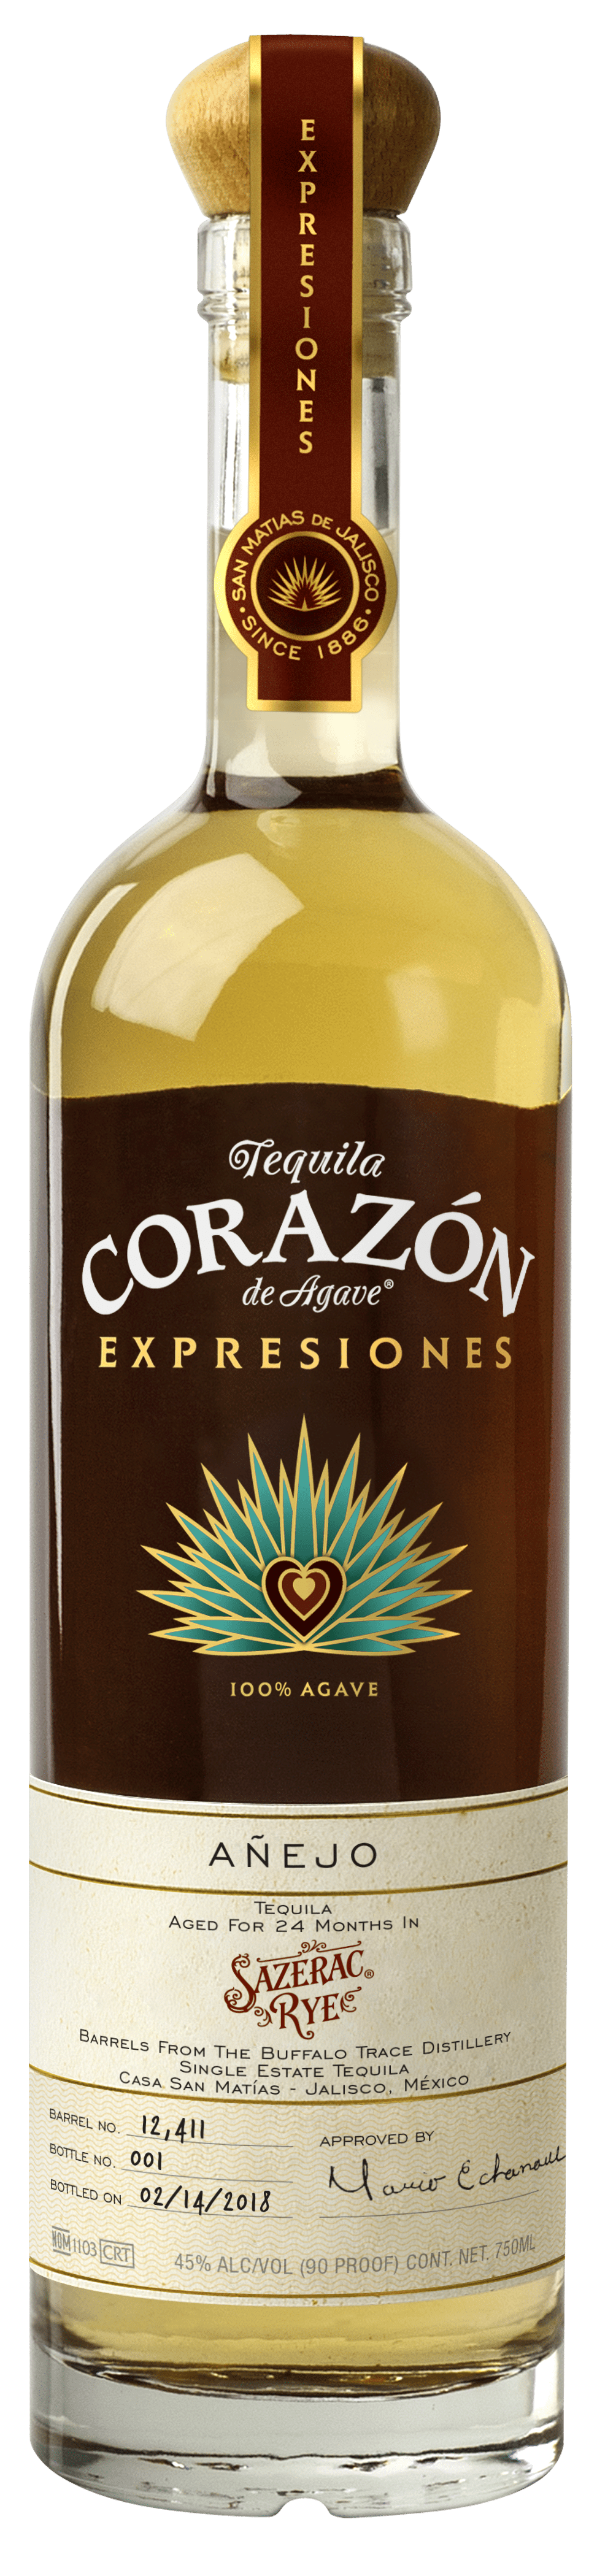 Corazon Expresiones Tequila Sazerac Rye Anejo bottle